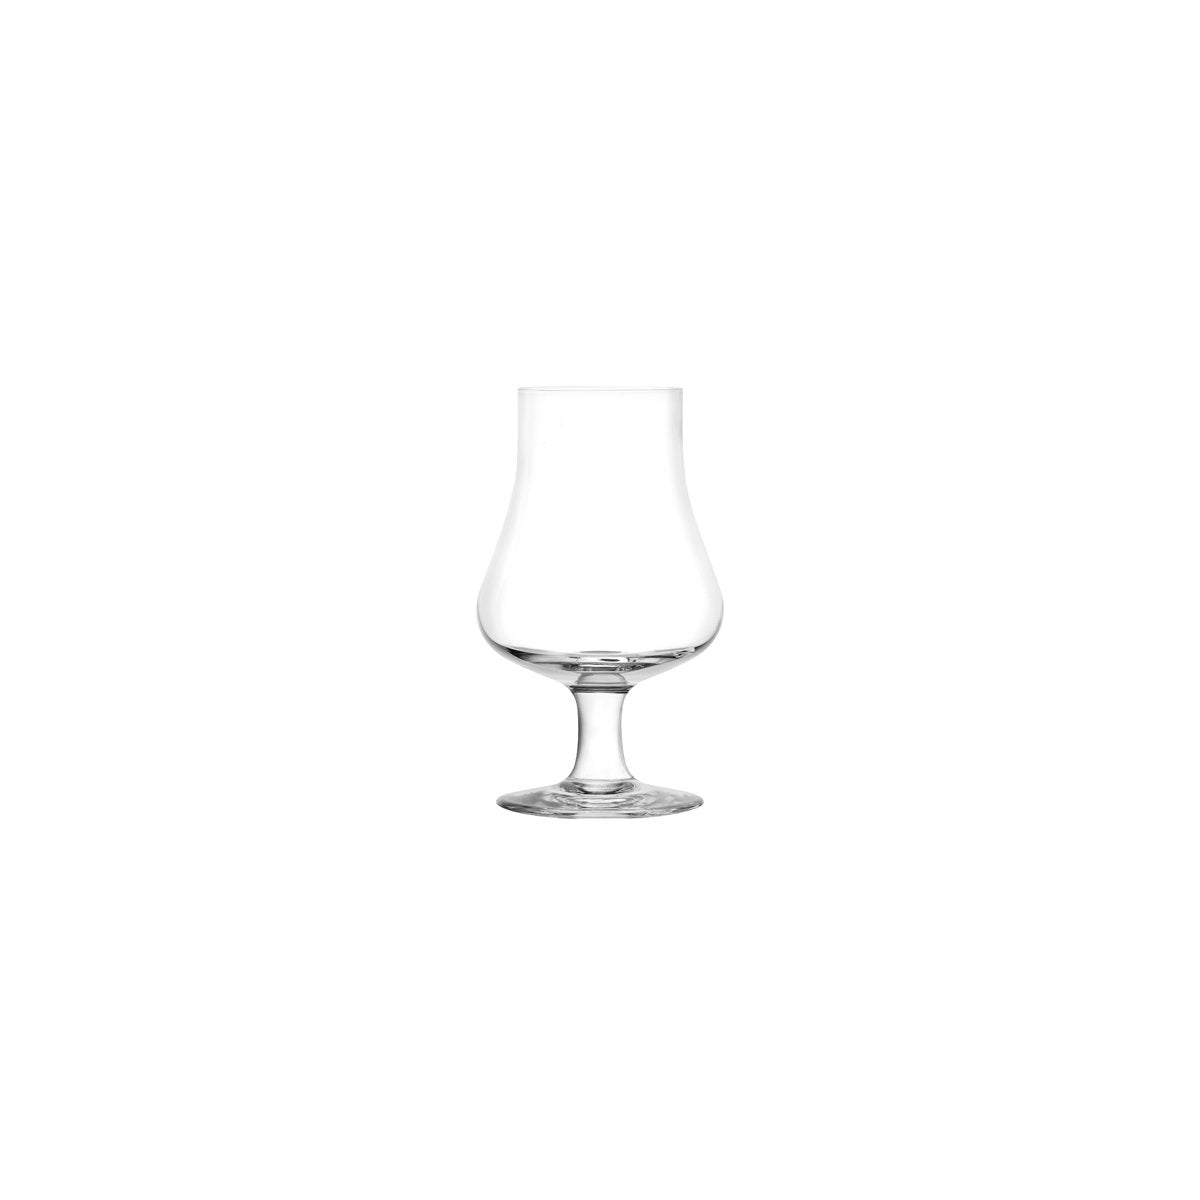 365-294 Stolzle Glencairn Whiskey Nosing Glass 194ml Tomkin Australia Hospitality Supplies